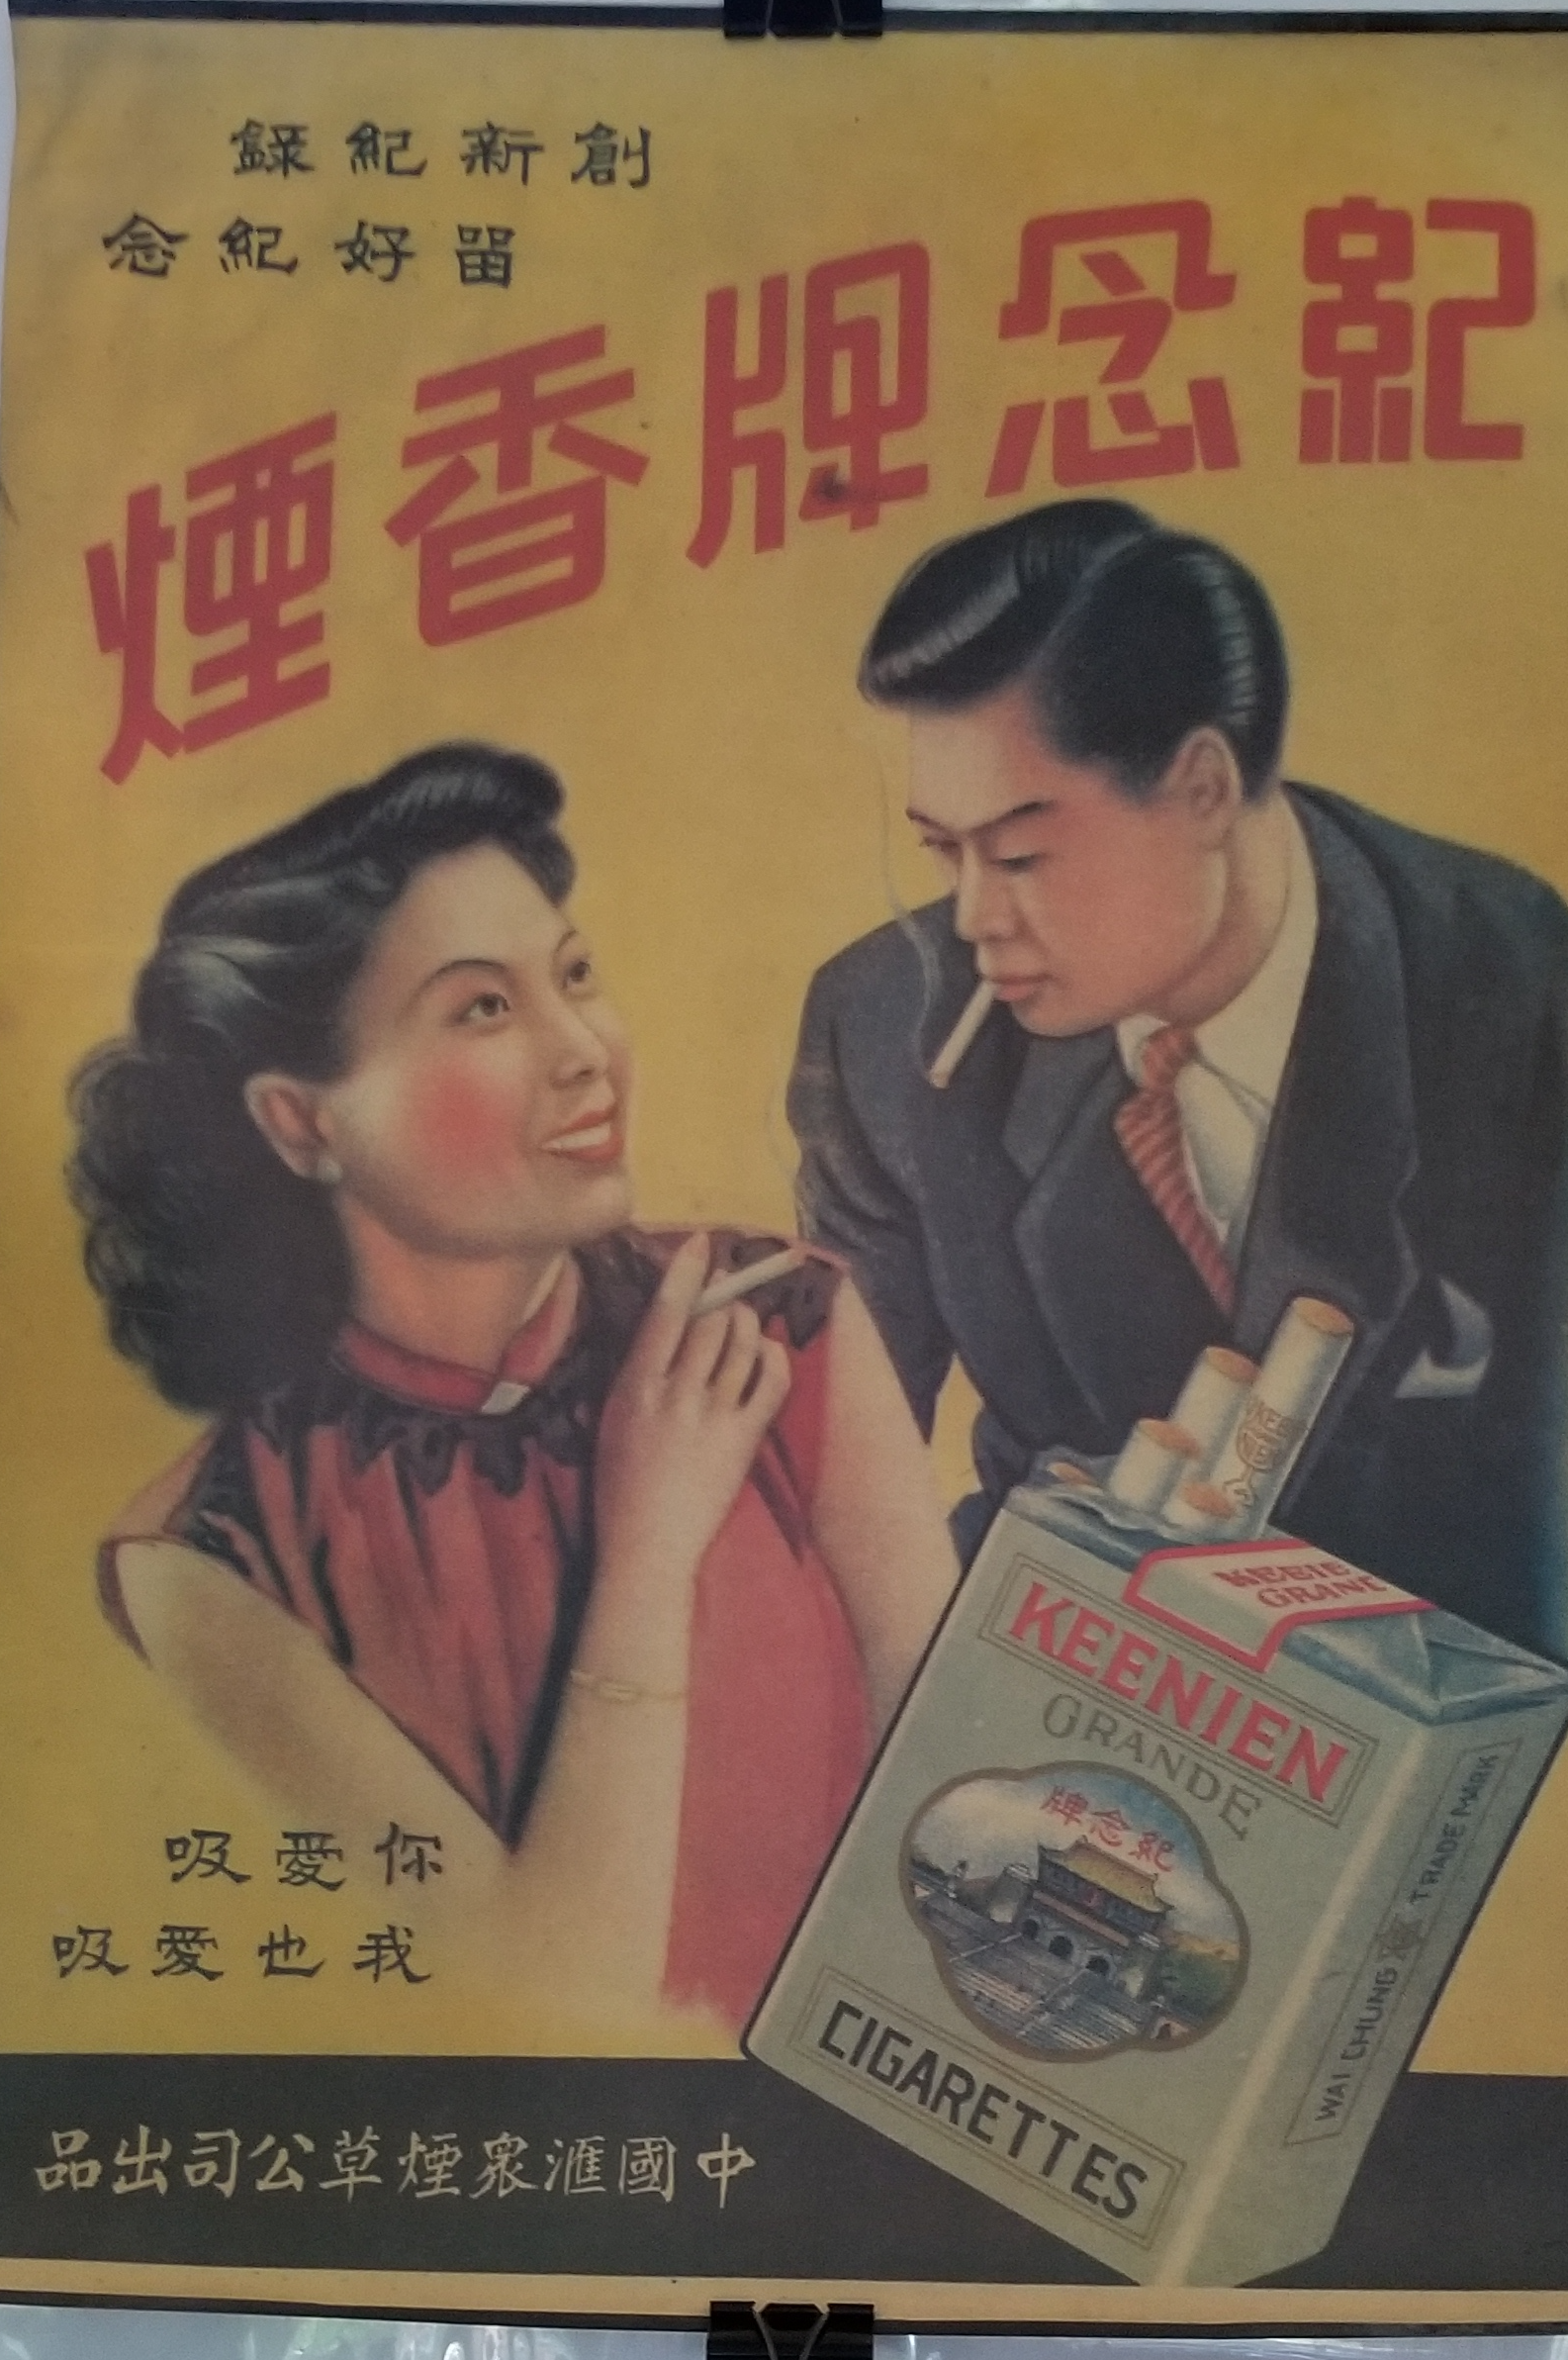 Vintage Shanghai Cigarette Advertising Poster Reproduction 1960s Gadabout Vintage Vintage advertisements vintage ads vintage posters poster ads car posters lucian bernhard bosch. vintage shanghai cigarette advertising poster reproduction 1960s